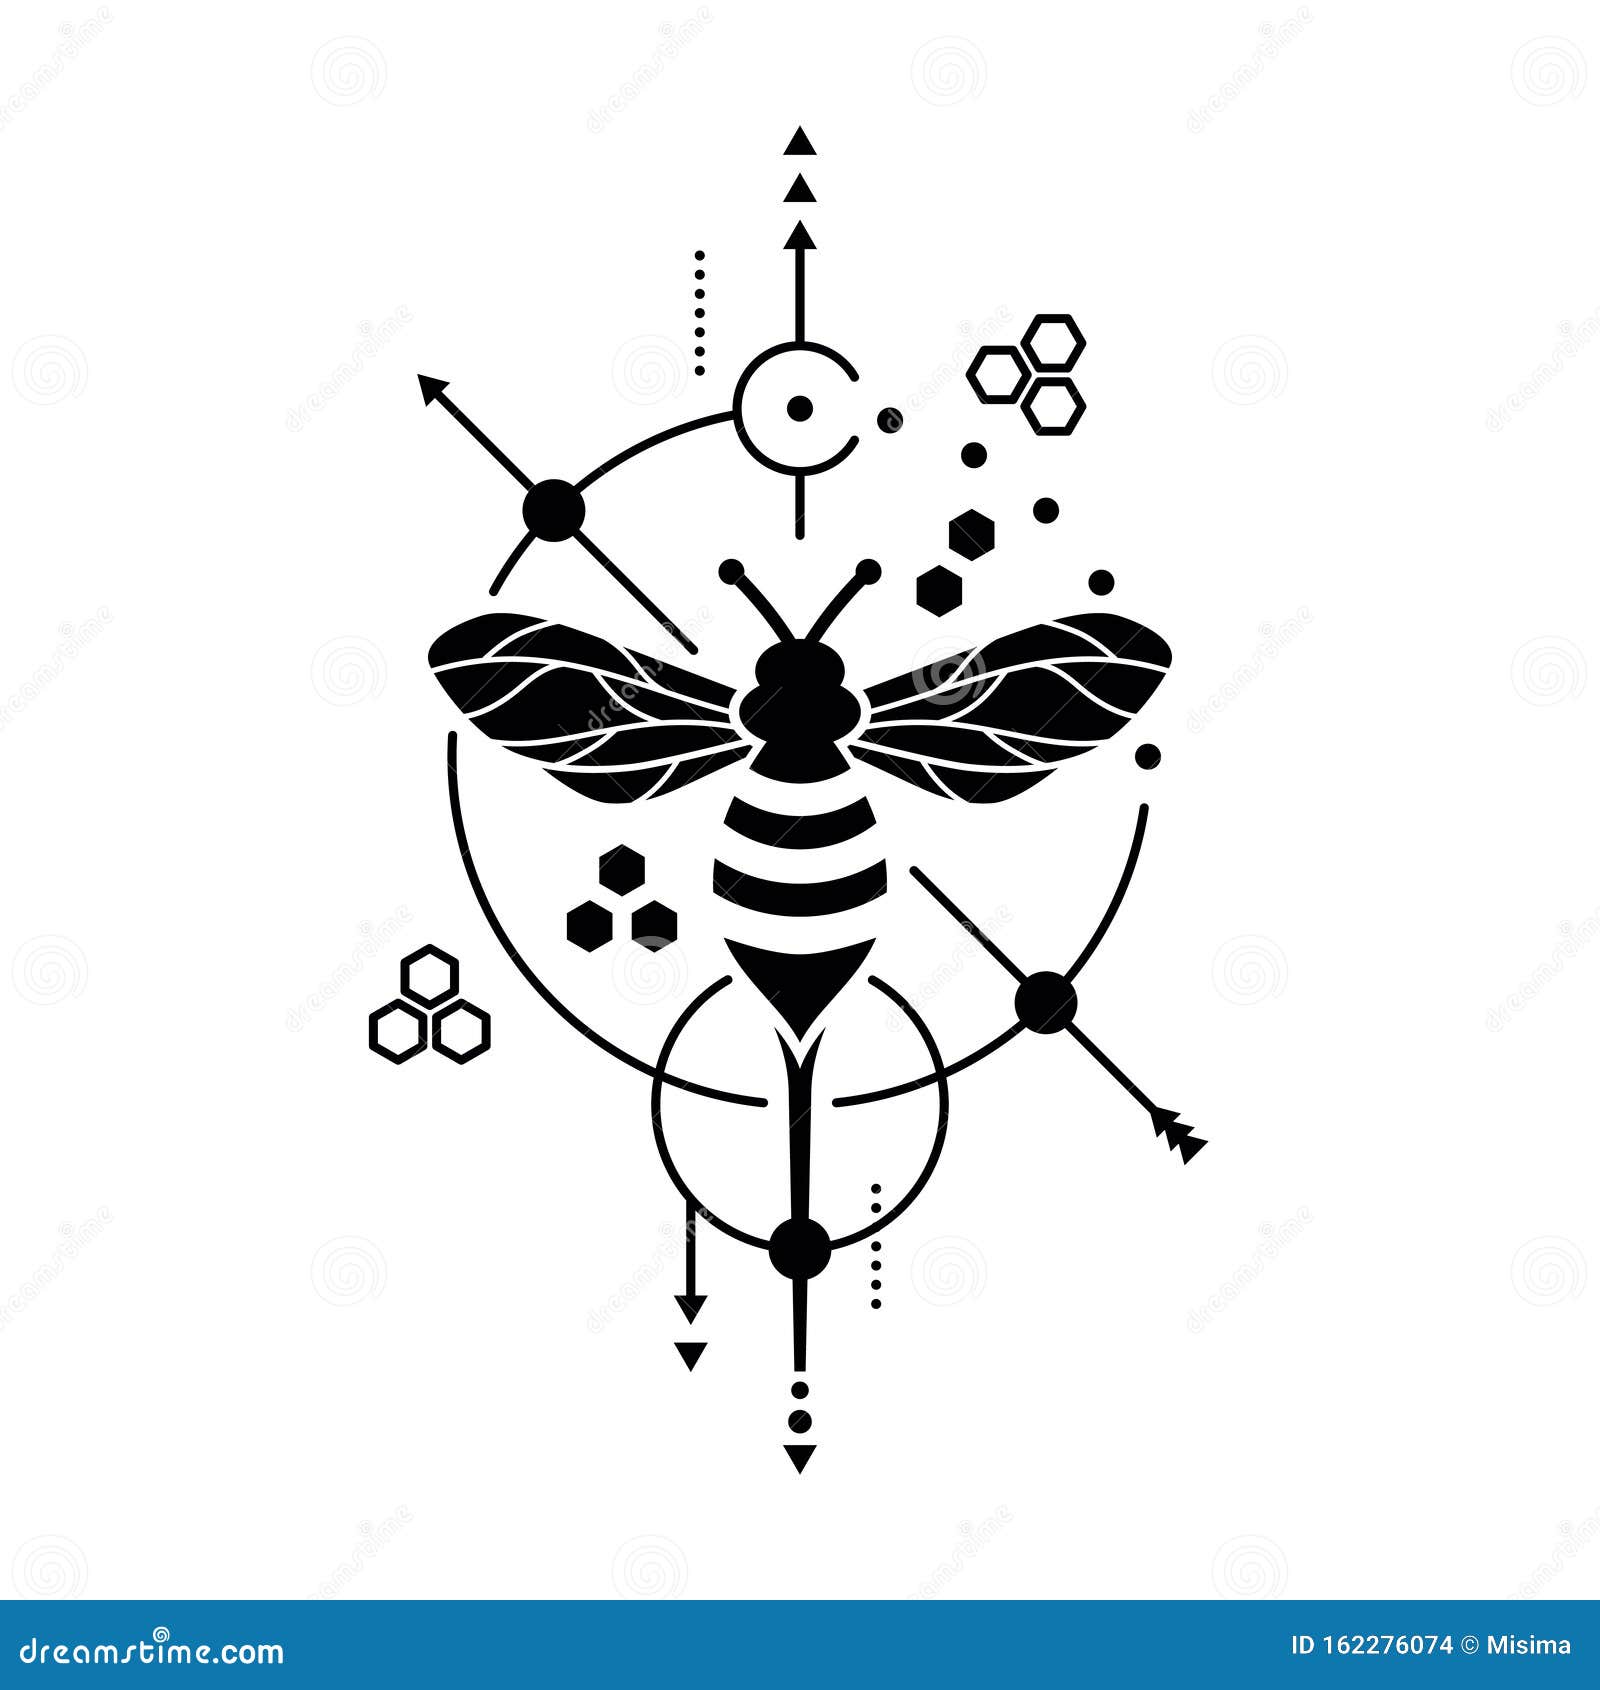 Casey Jones on Twitter Honeycomb on one side tattoo saltlakecity  anchorinktattoo ear bee httptcok0kU7GpRMh  Twitter